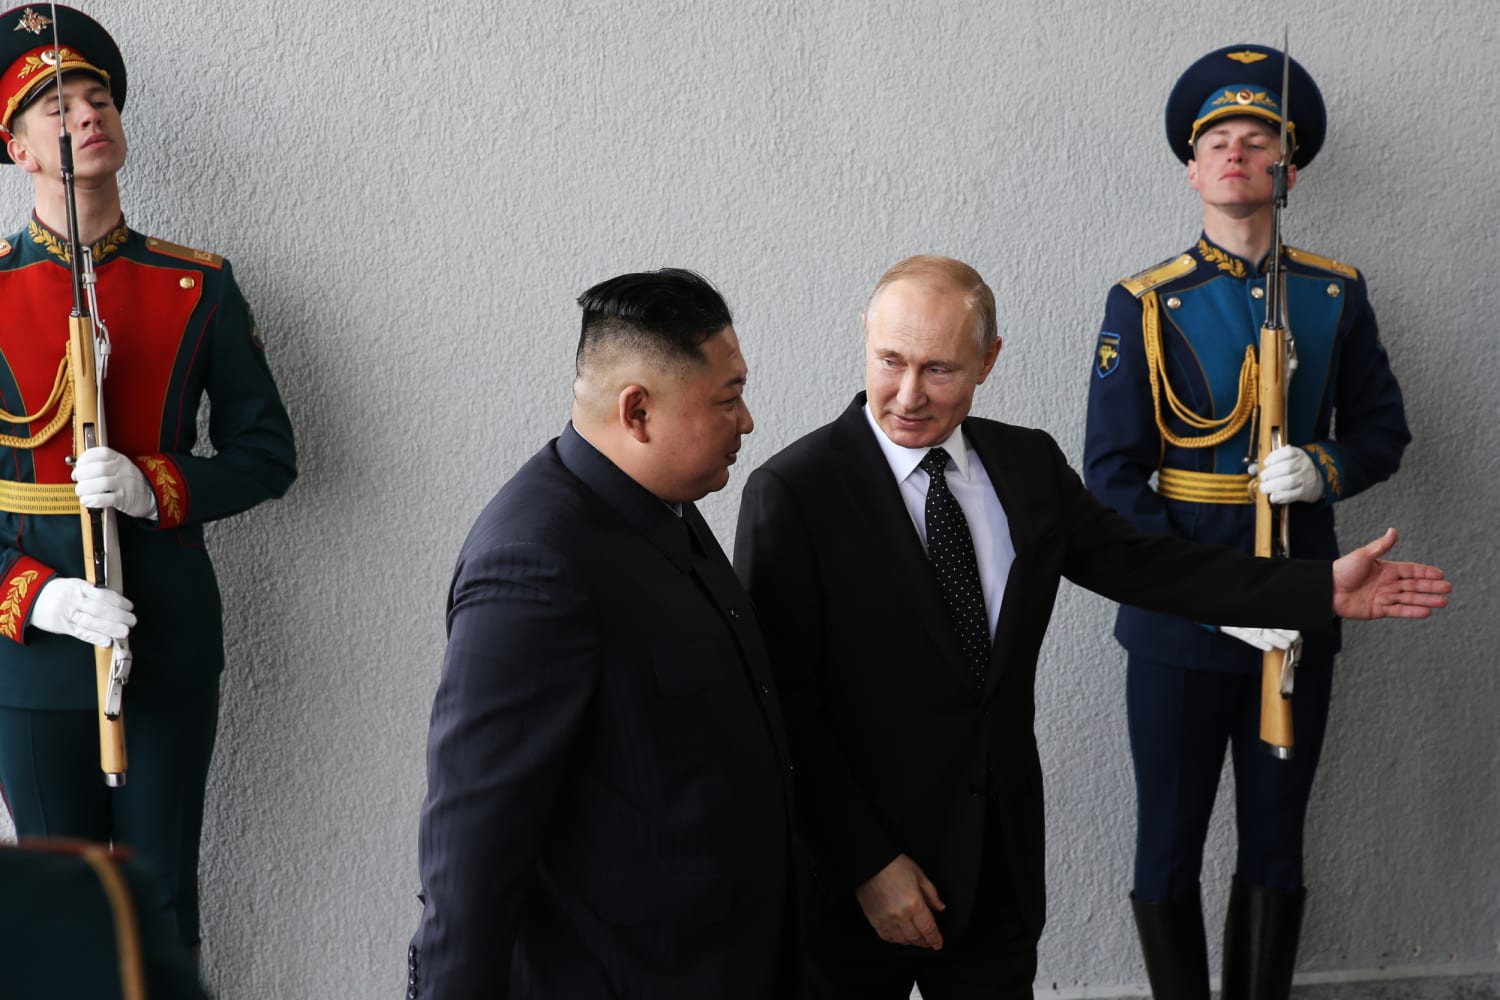 North Korea’s Kim Jong Un to meet Putin in Russia for arms talks: U.S.